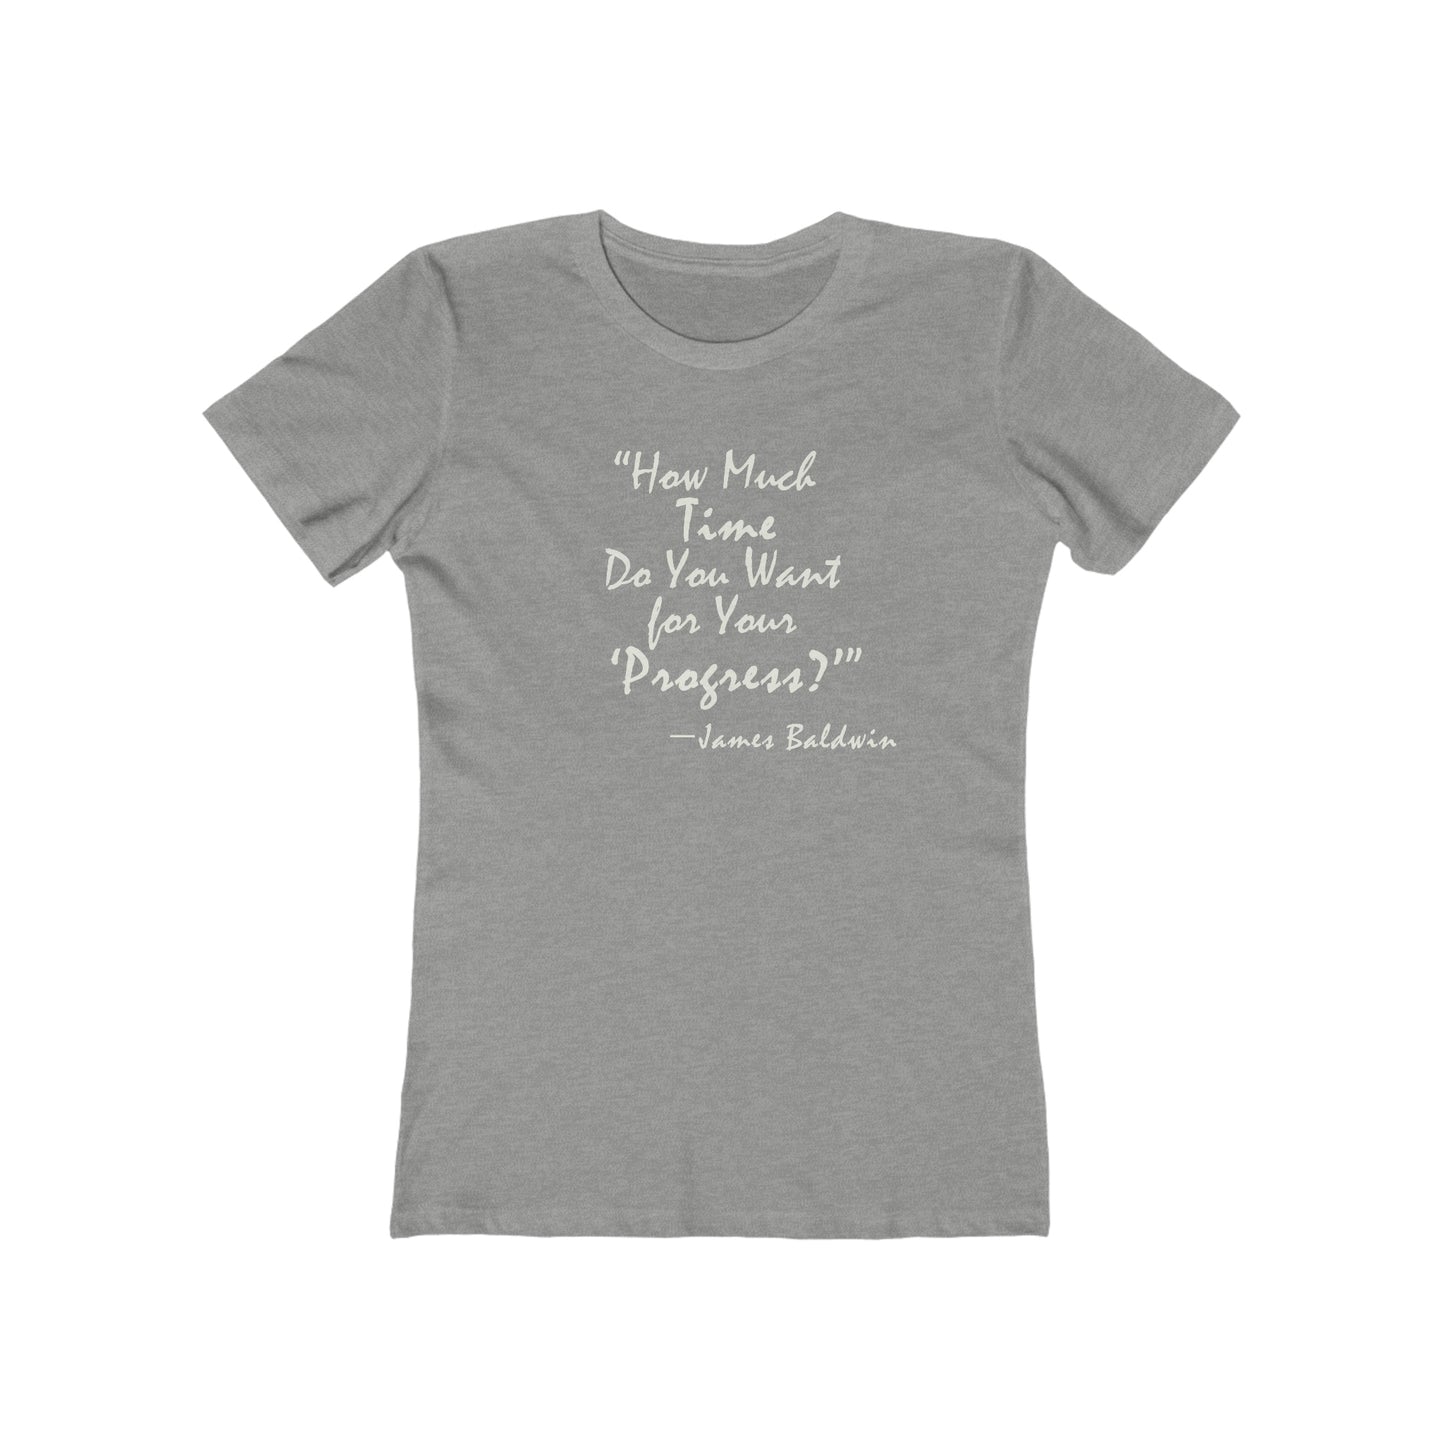 James Baldwin Quote - "Progress" - Women's T-Shirt